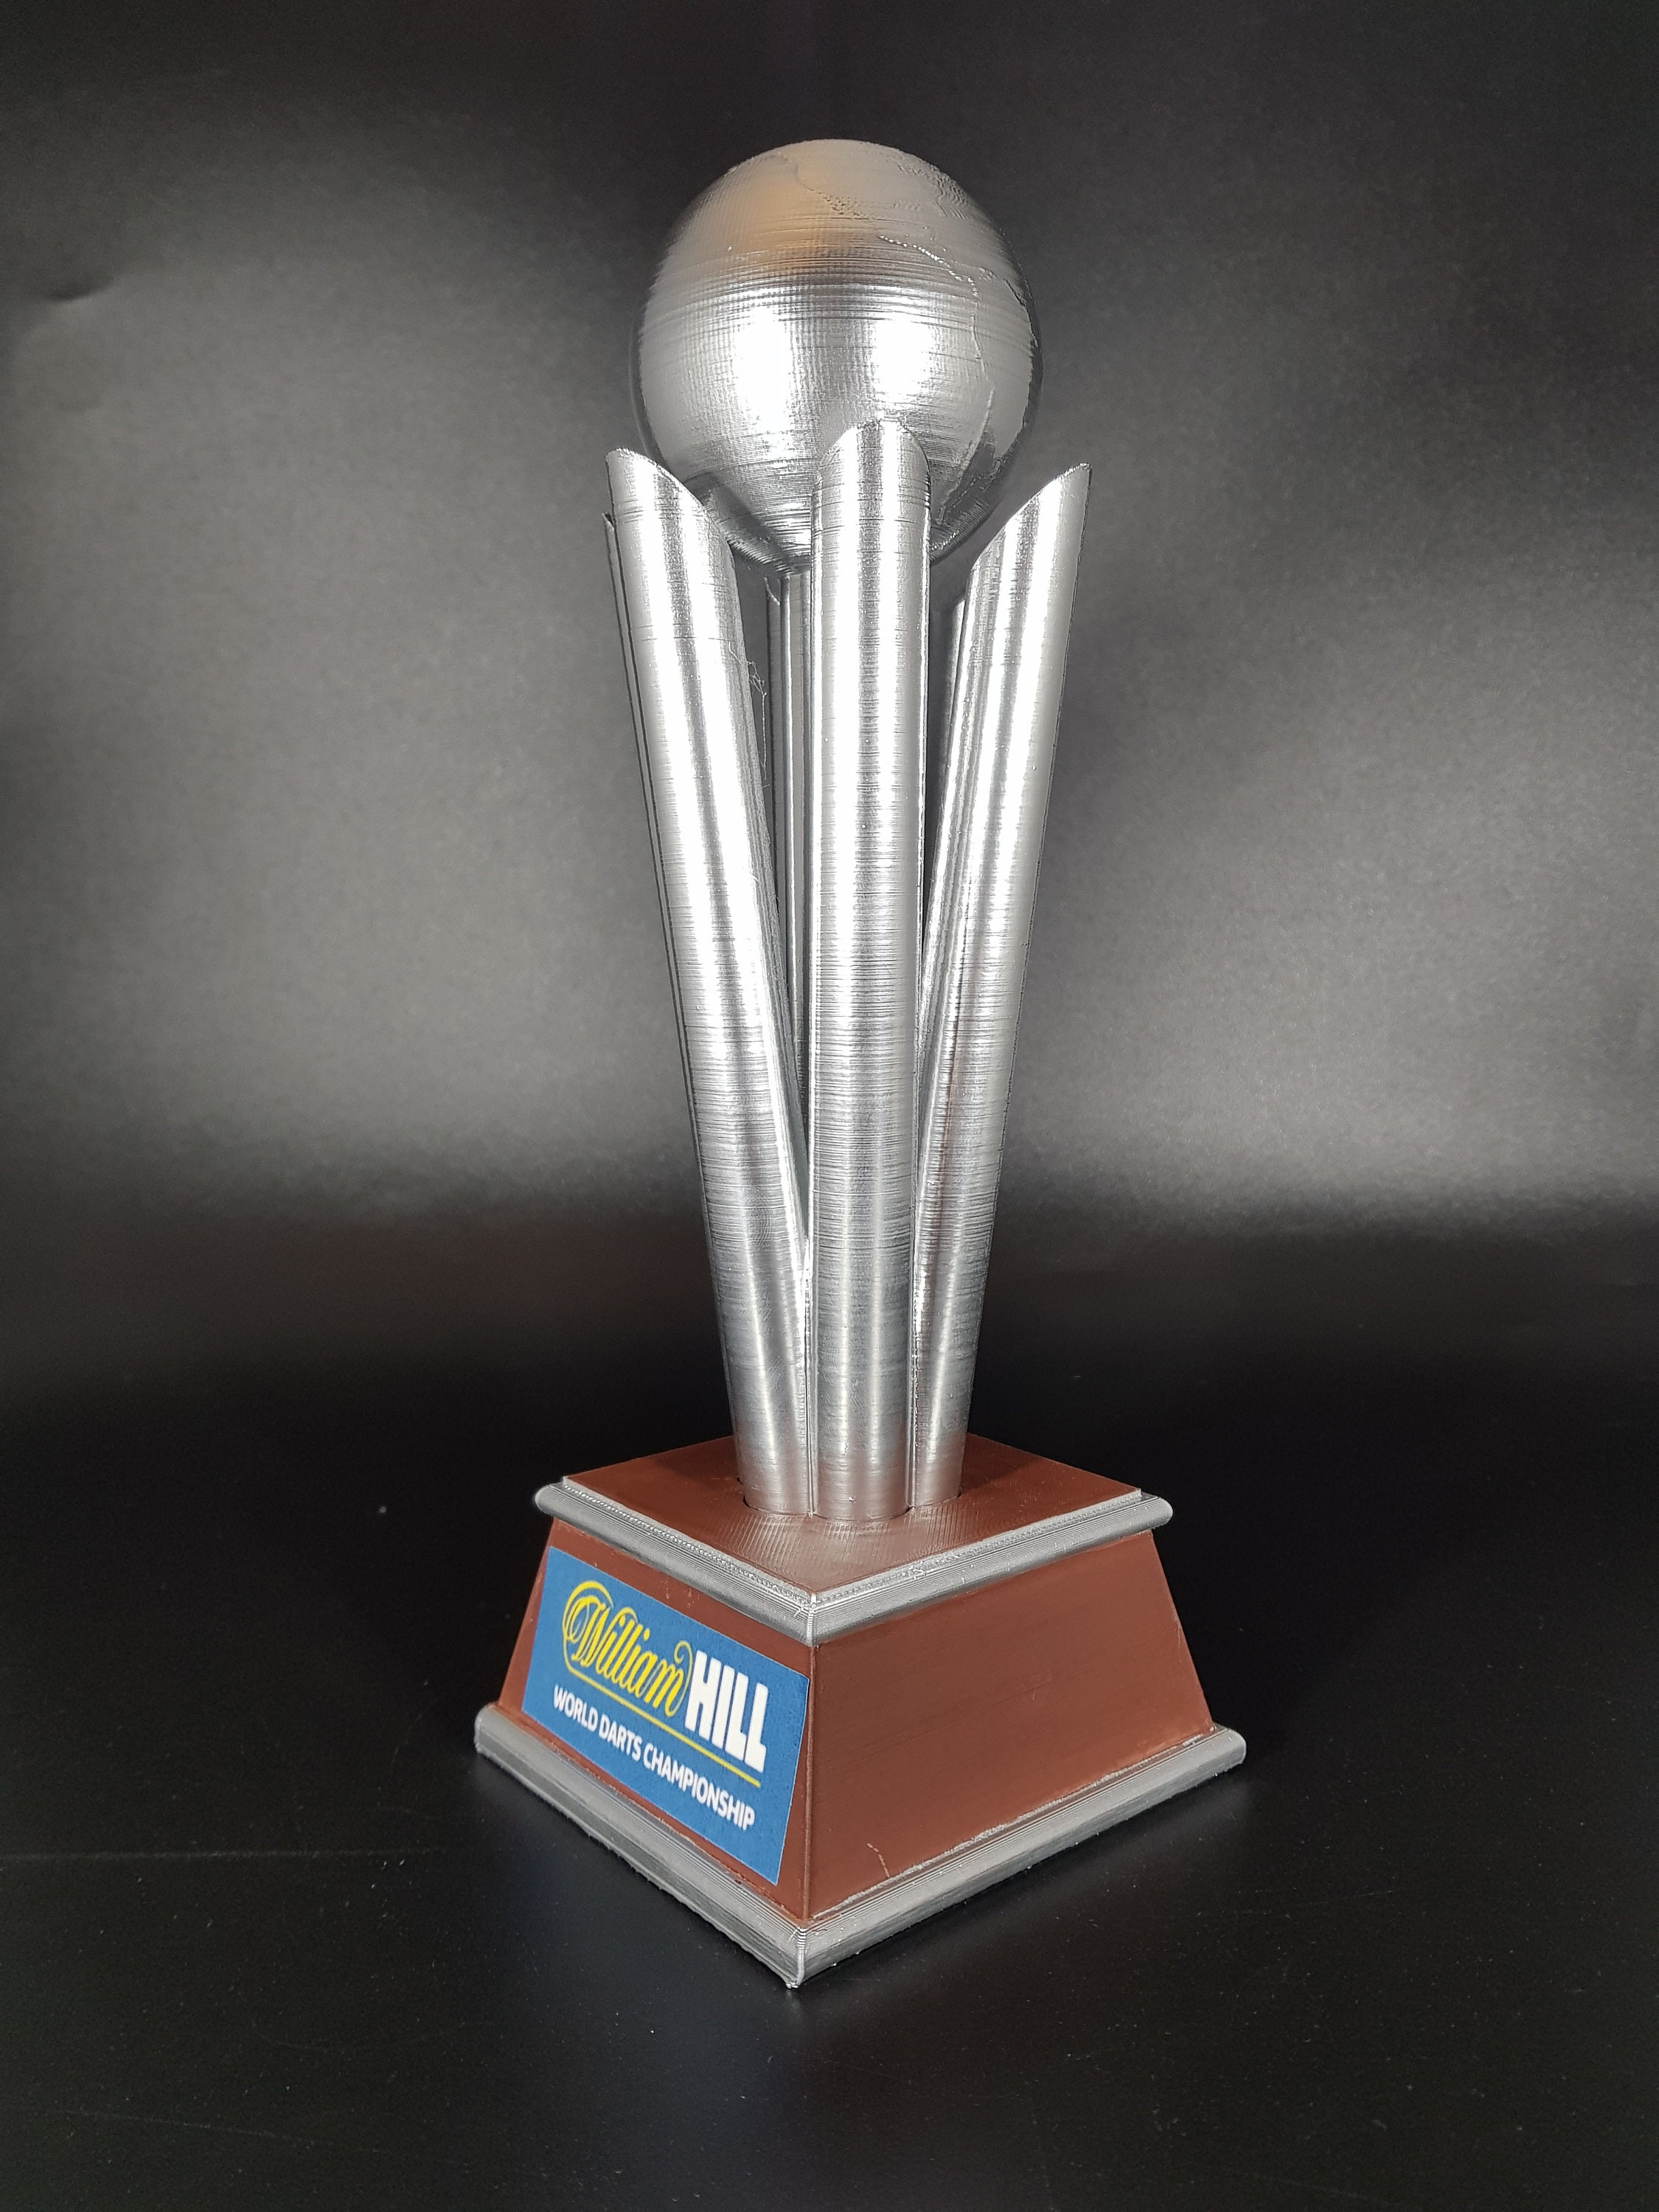 Ygo Champions League Trophy UEFA Troféus Futebol Réplica Prêmio